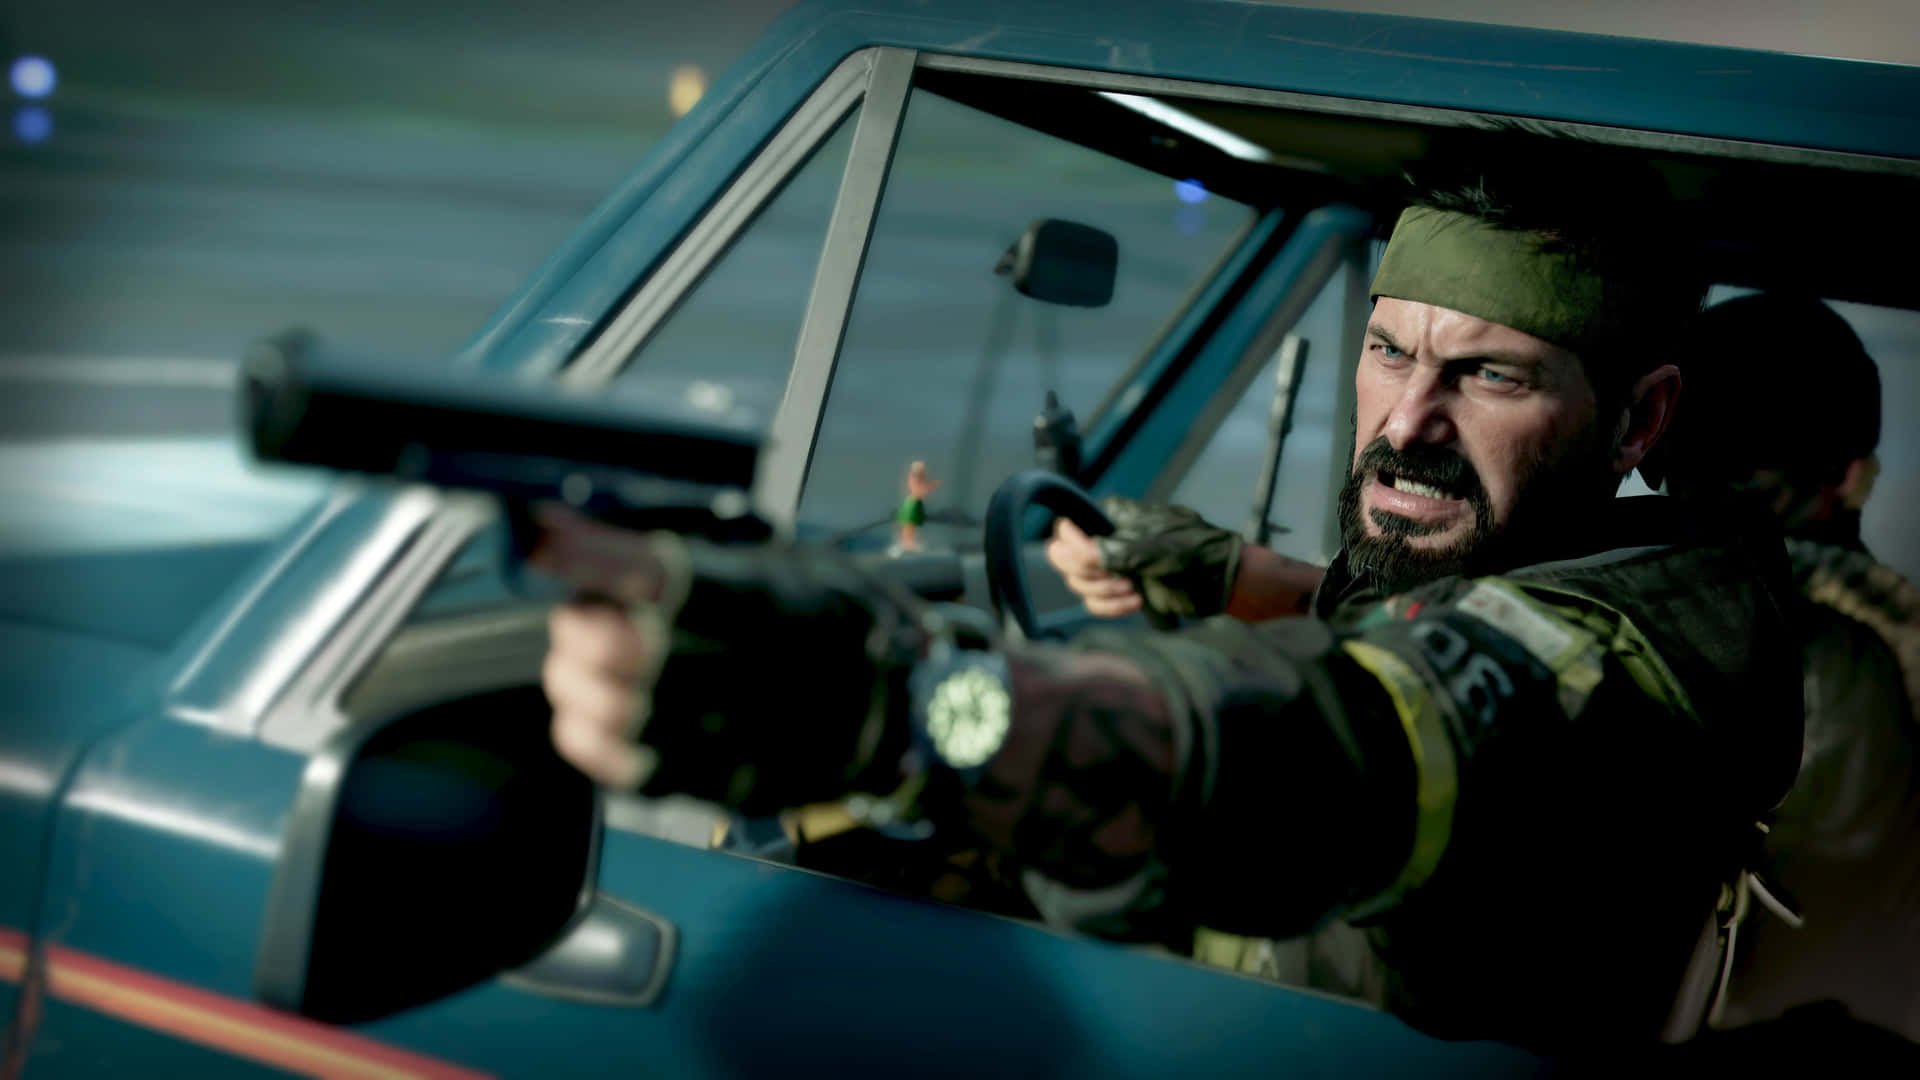 Frankwood Pistole Hd Call Of Duty Black Ops Cold War Hintergrund.